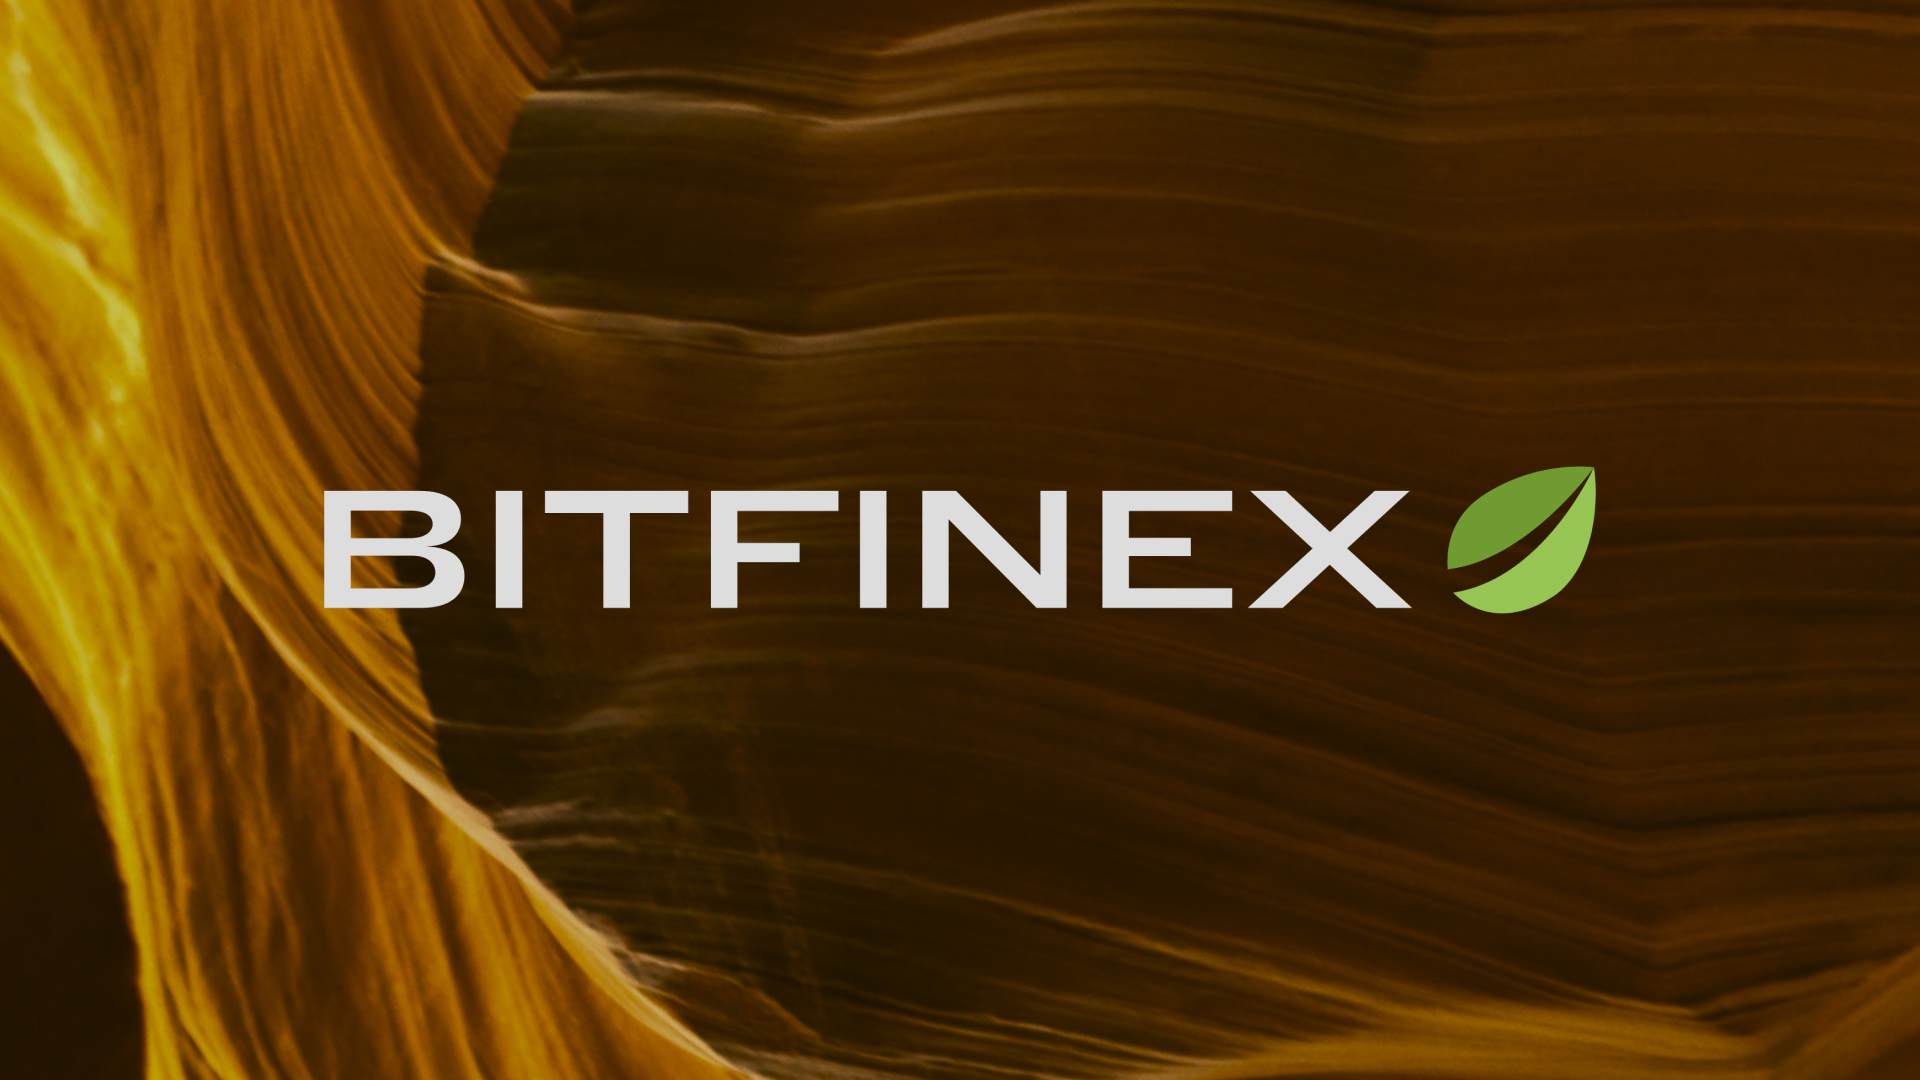 bitfinex-kripto-para-borsa-delist-haber-analiz-fiyat-usd-dolar